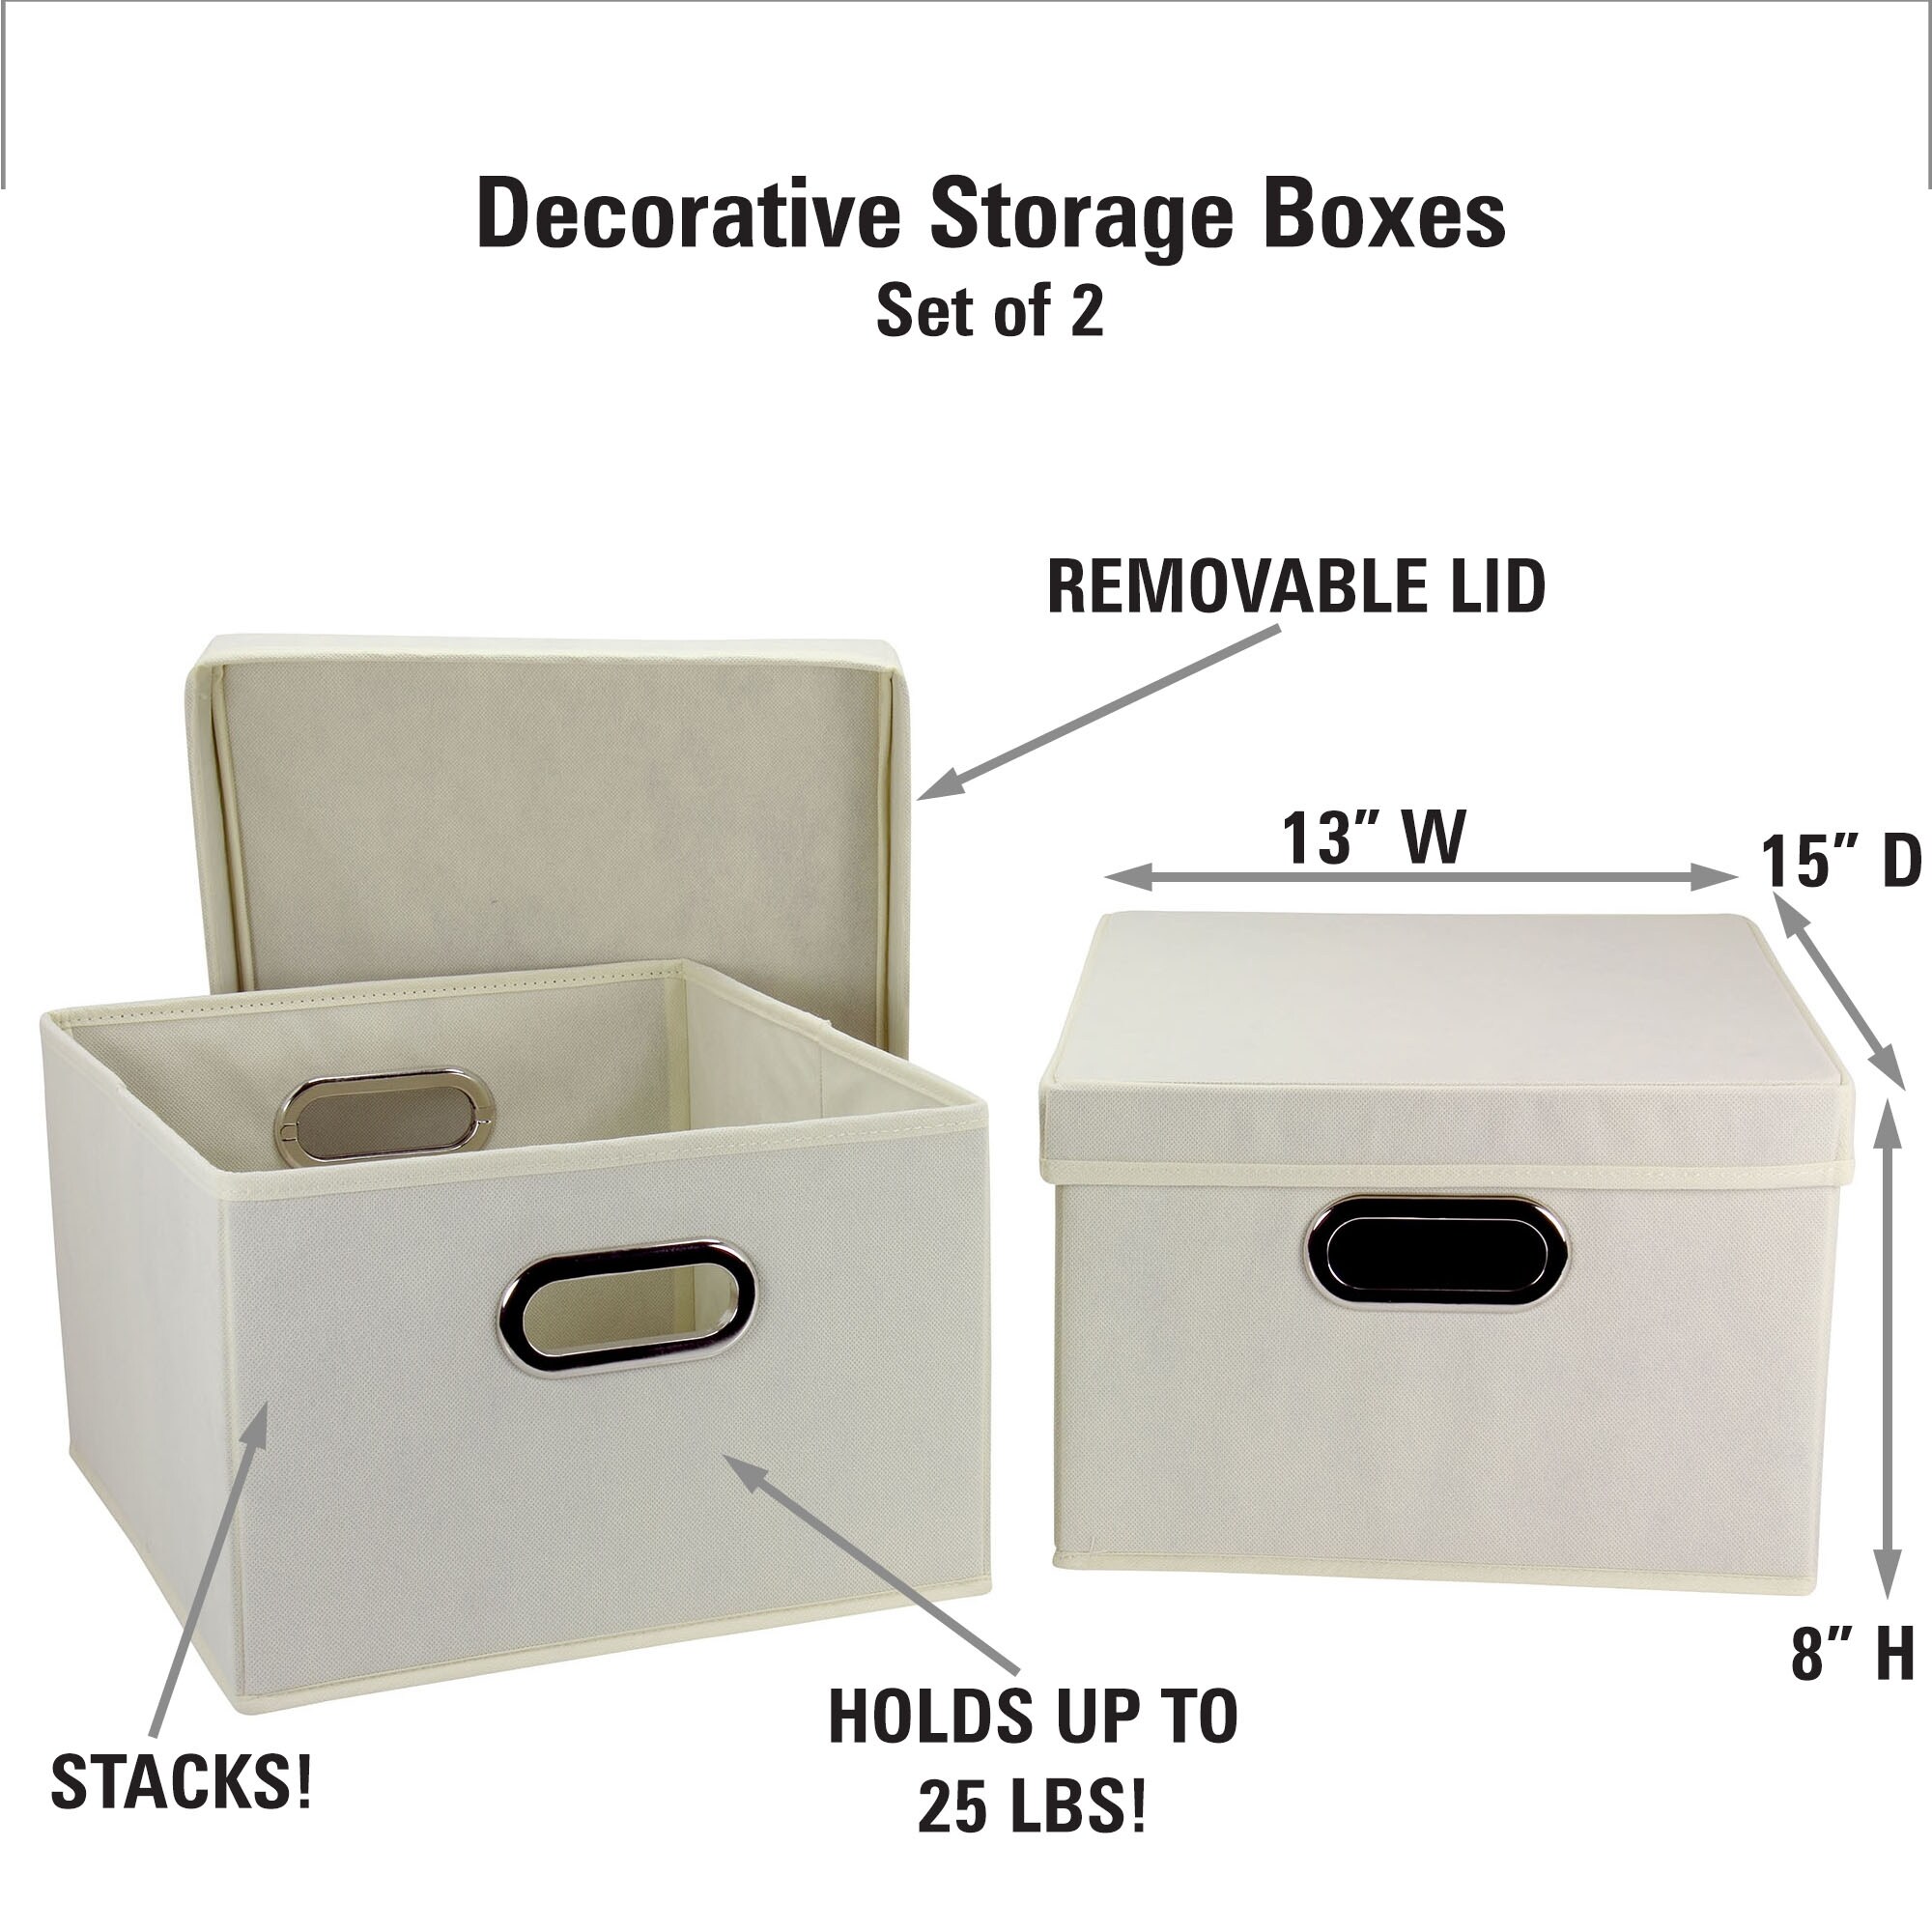 Durable and Decorative Storage Bins